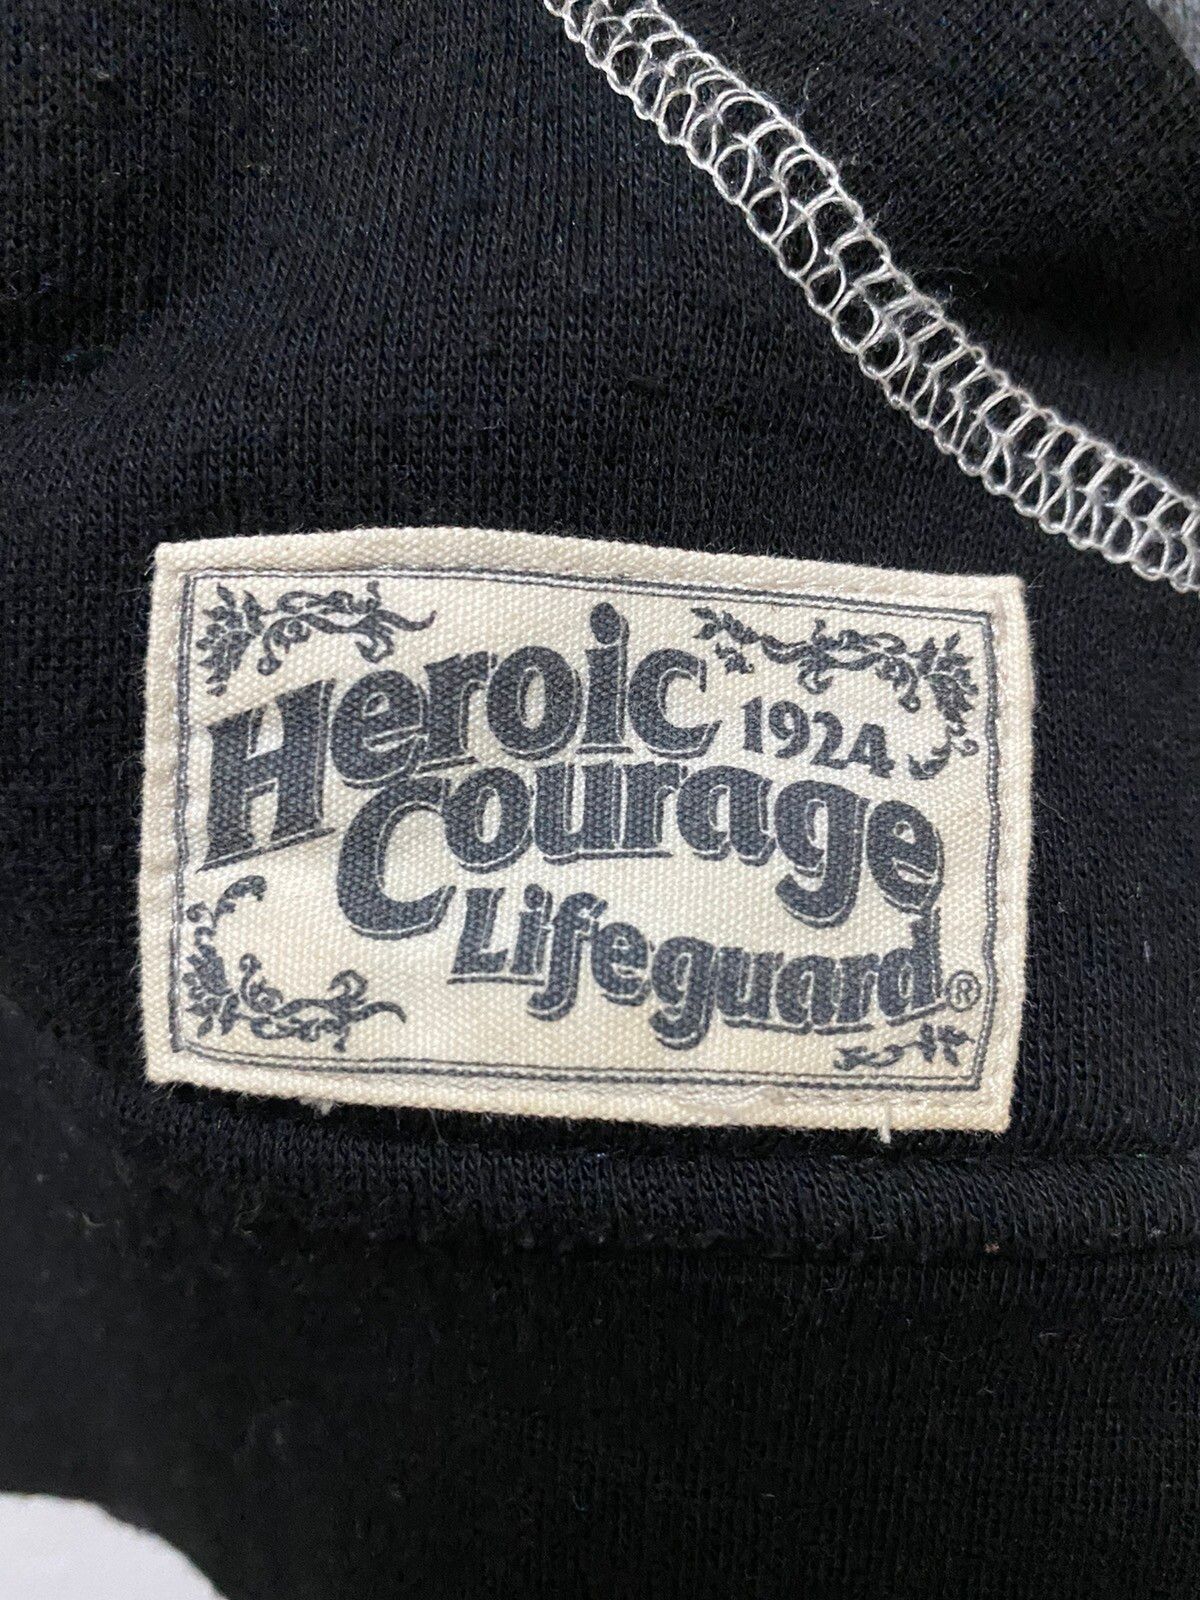 Japanese Brand - Vintage Heroic 1924 Courage Lifeguard Sweater Hoodie - 6